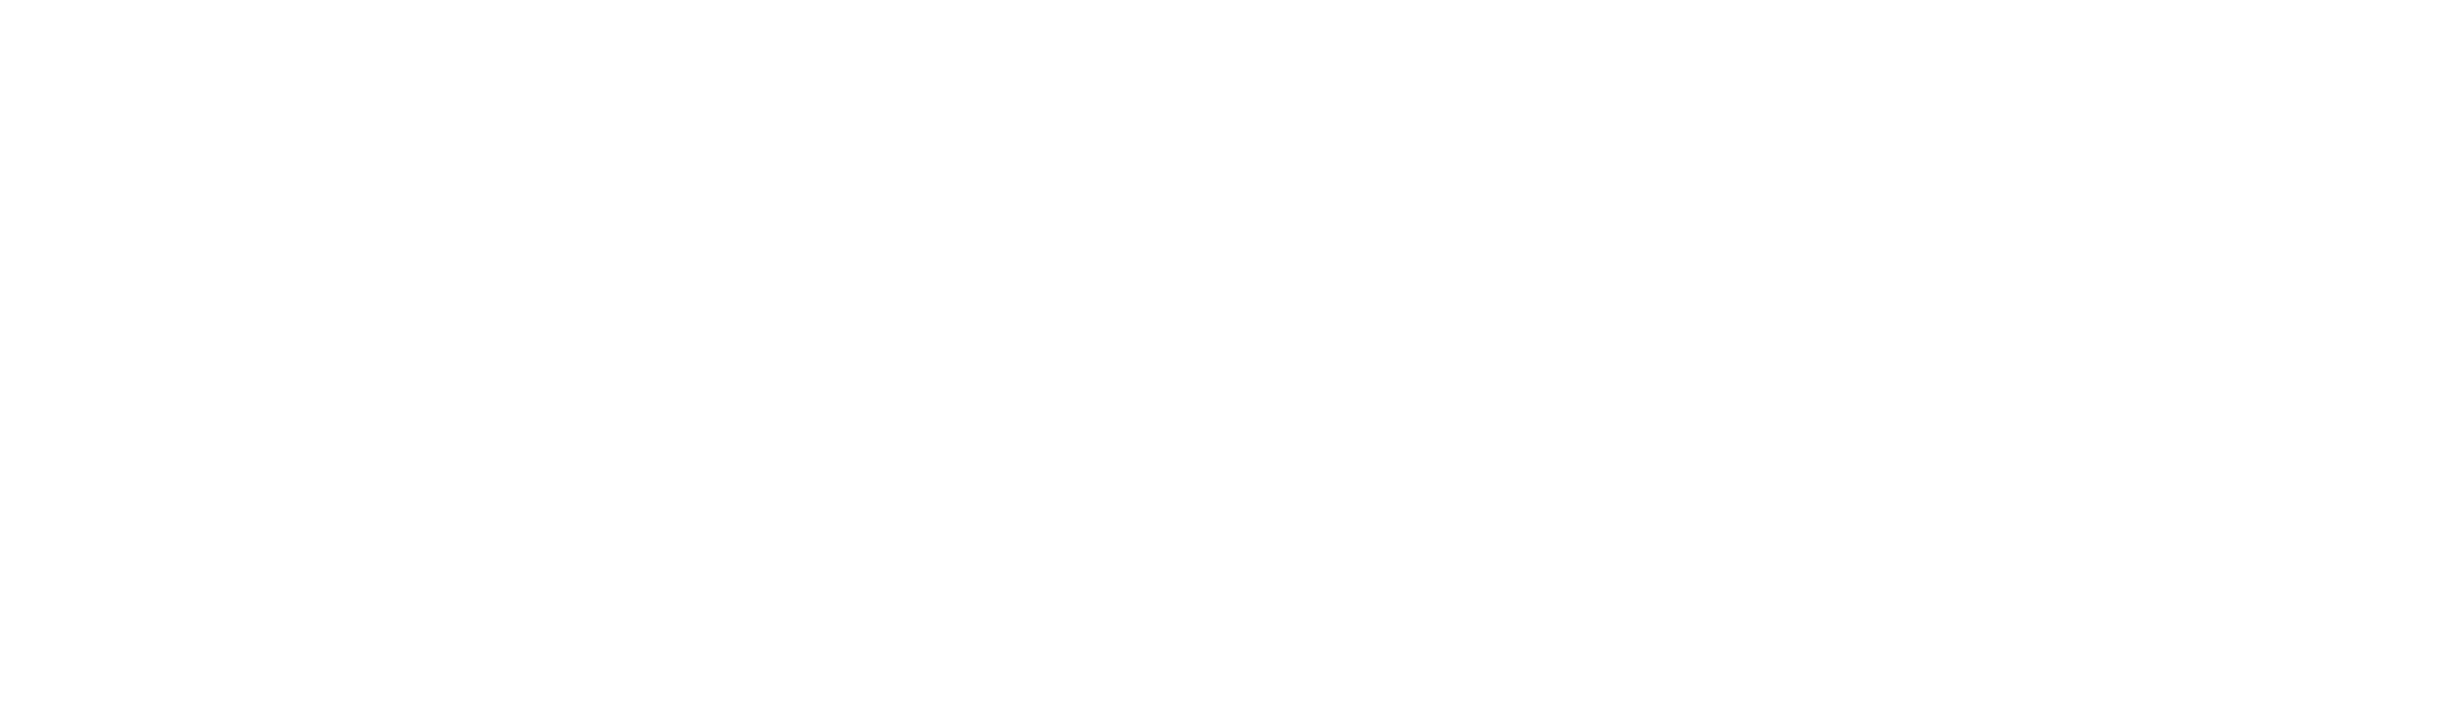 Climaider - logo